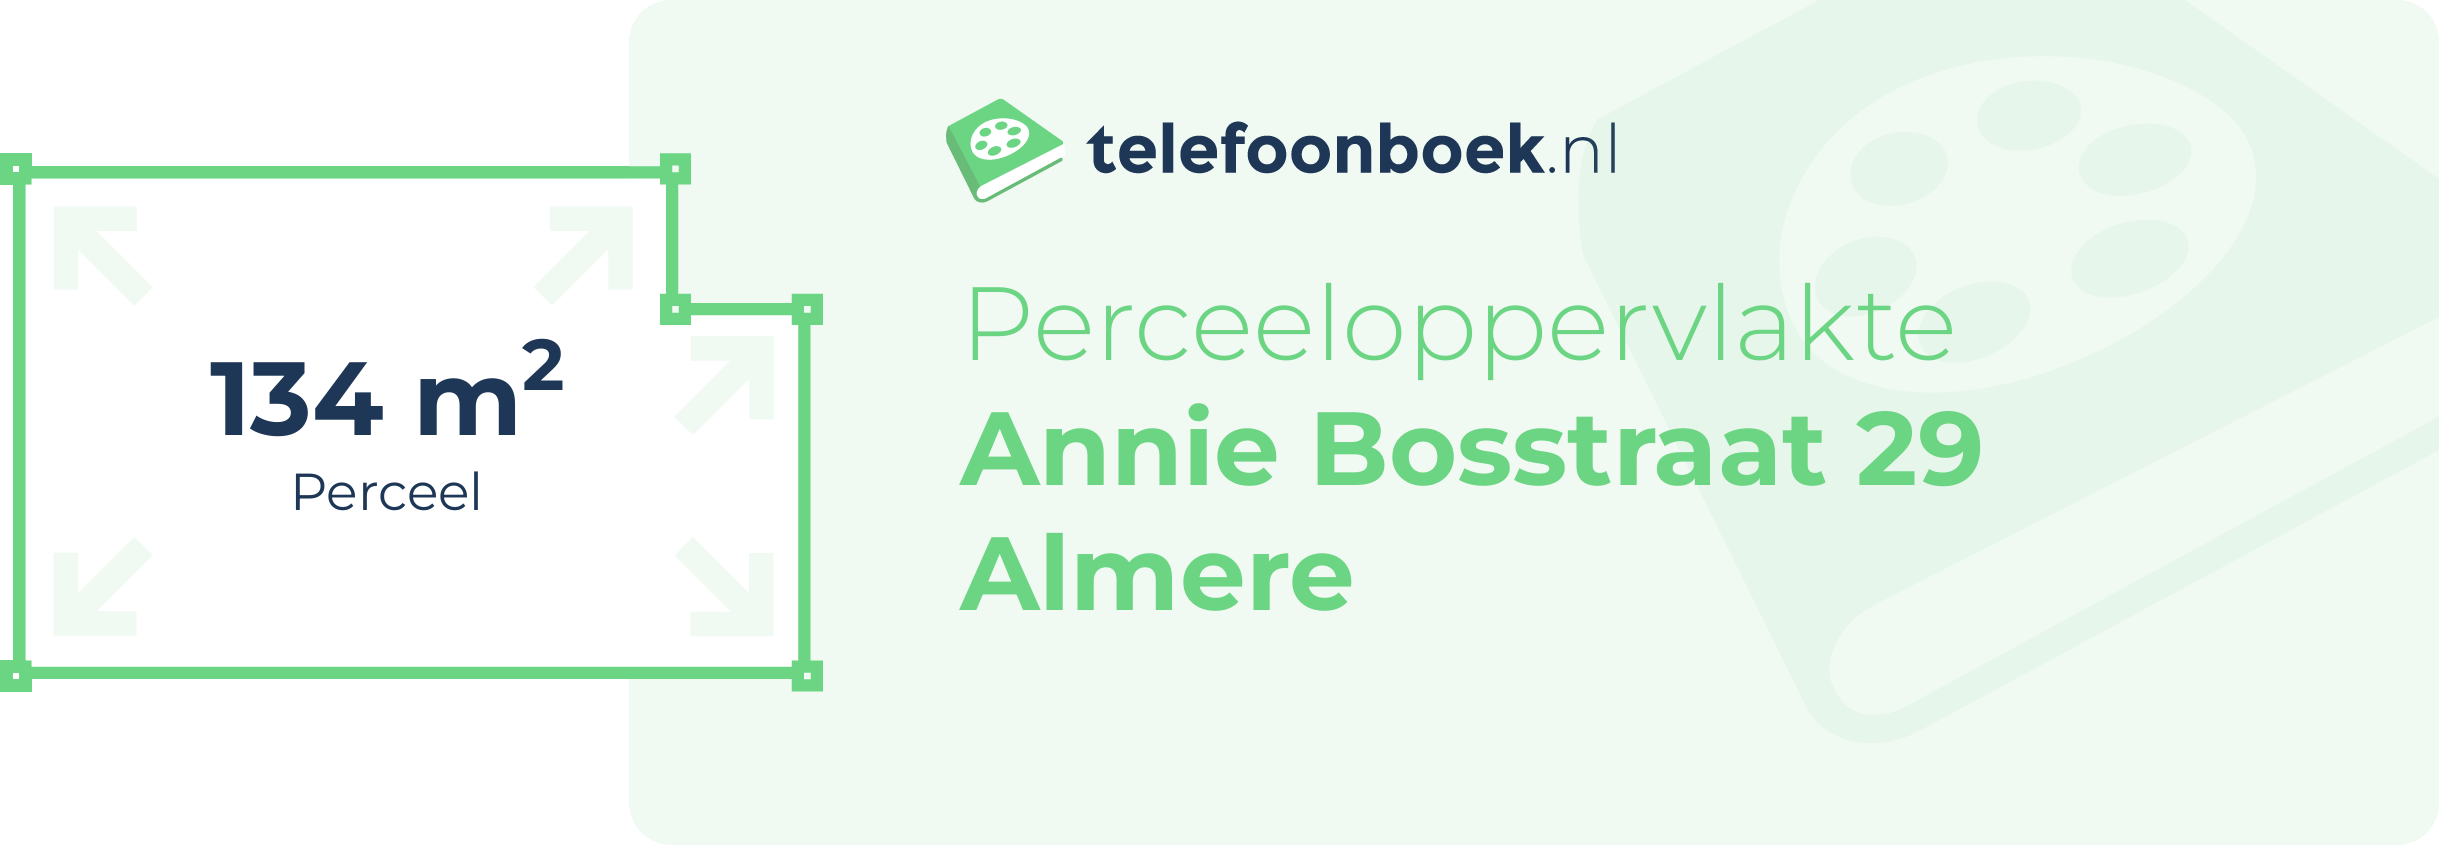 Perceeloppervlakte Annie Bosstraat 29 Almere